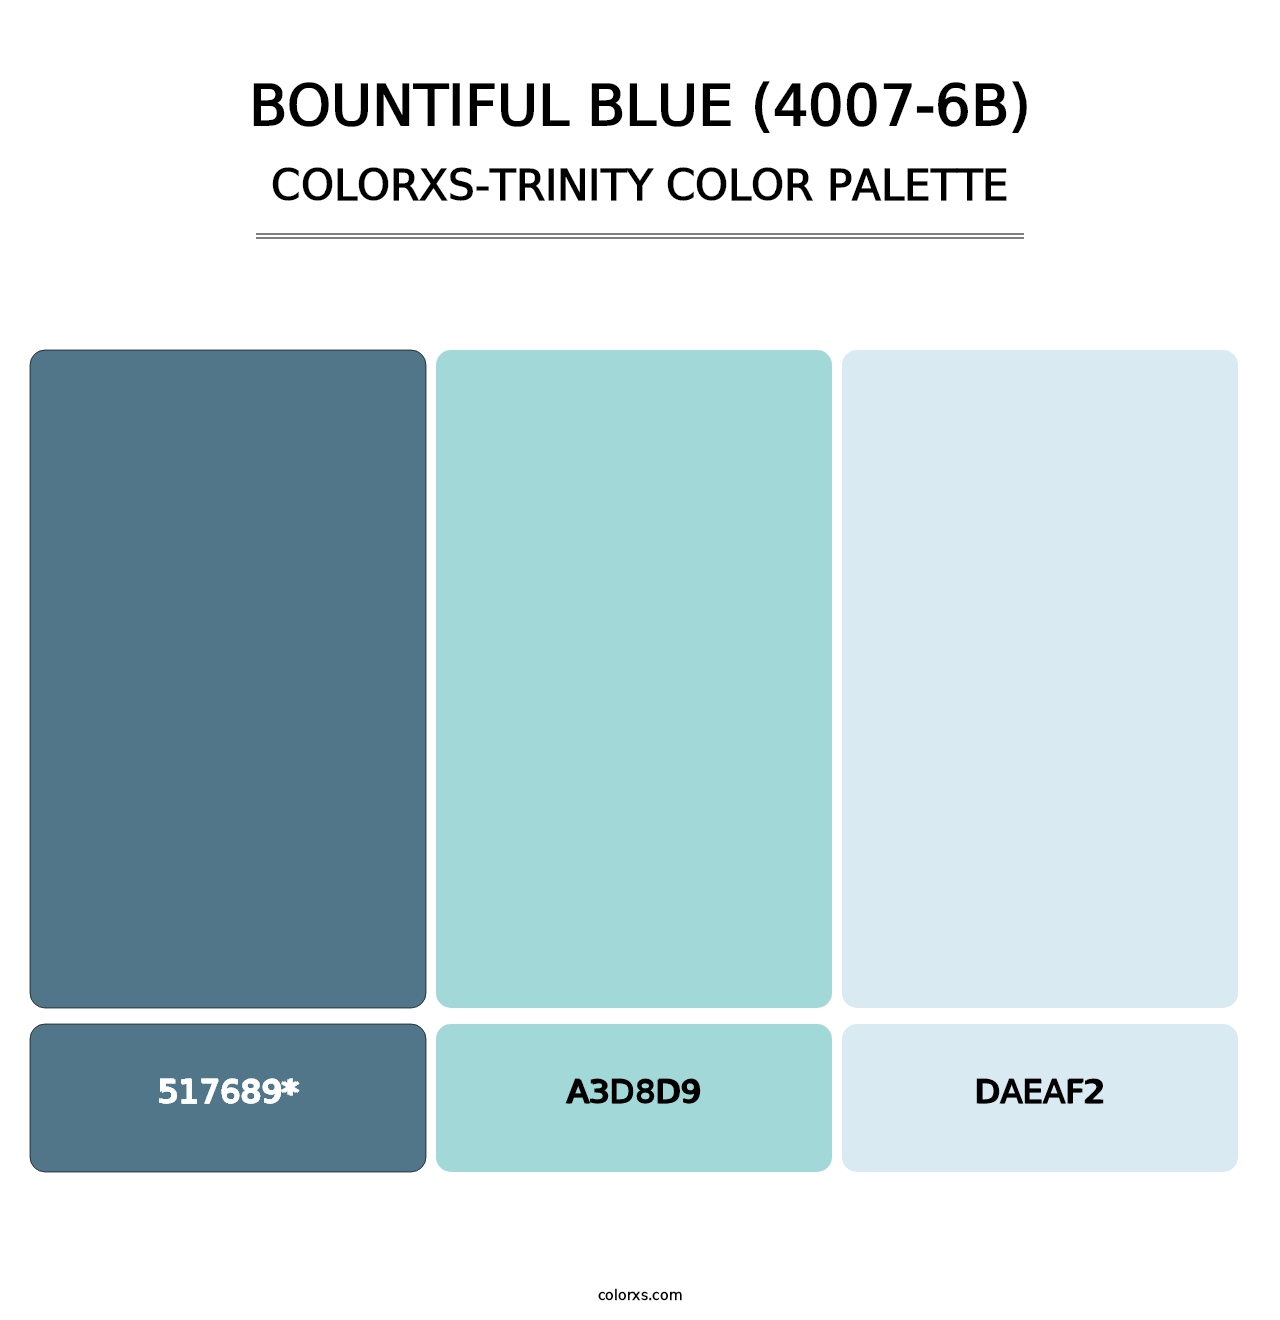 Bountiful Blue (4007-6B) - Colorxs Trinity Palette